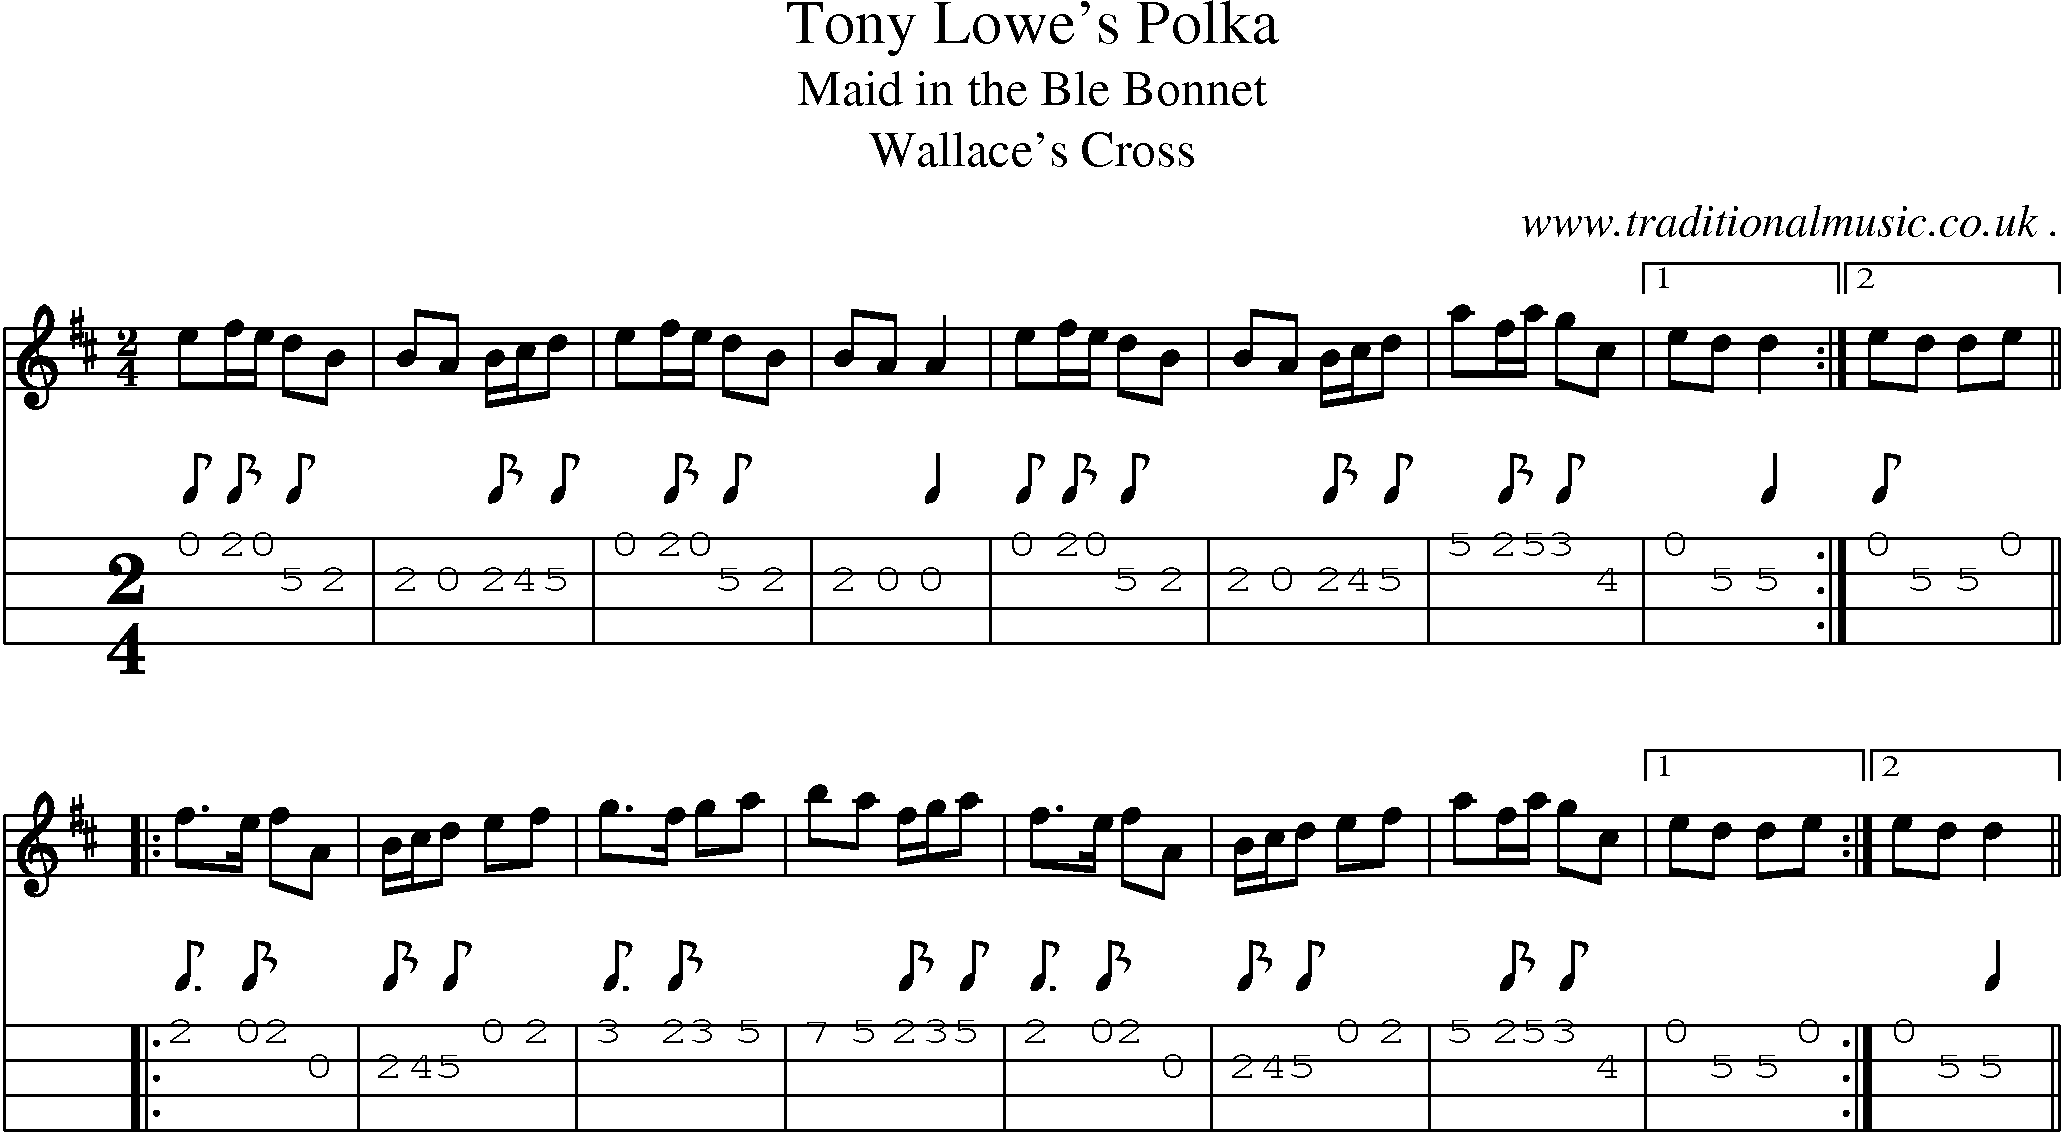 Sheet-Music and Mandolin Tabs for Tony Lowes Polka